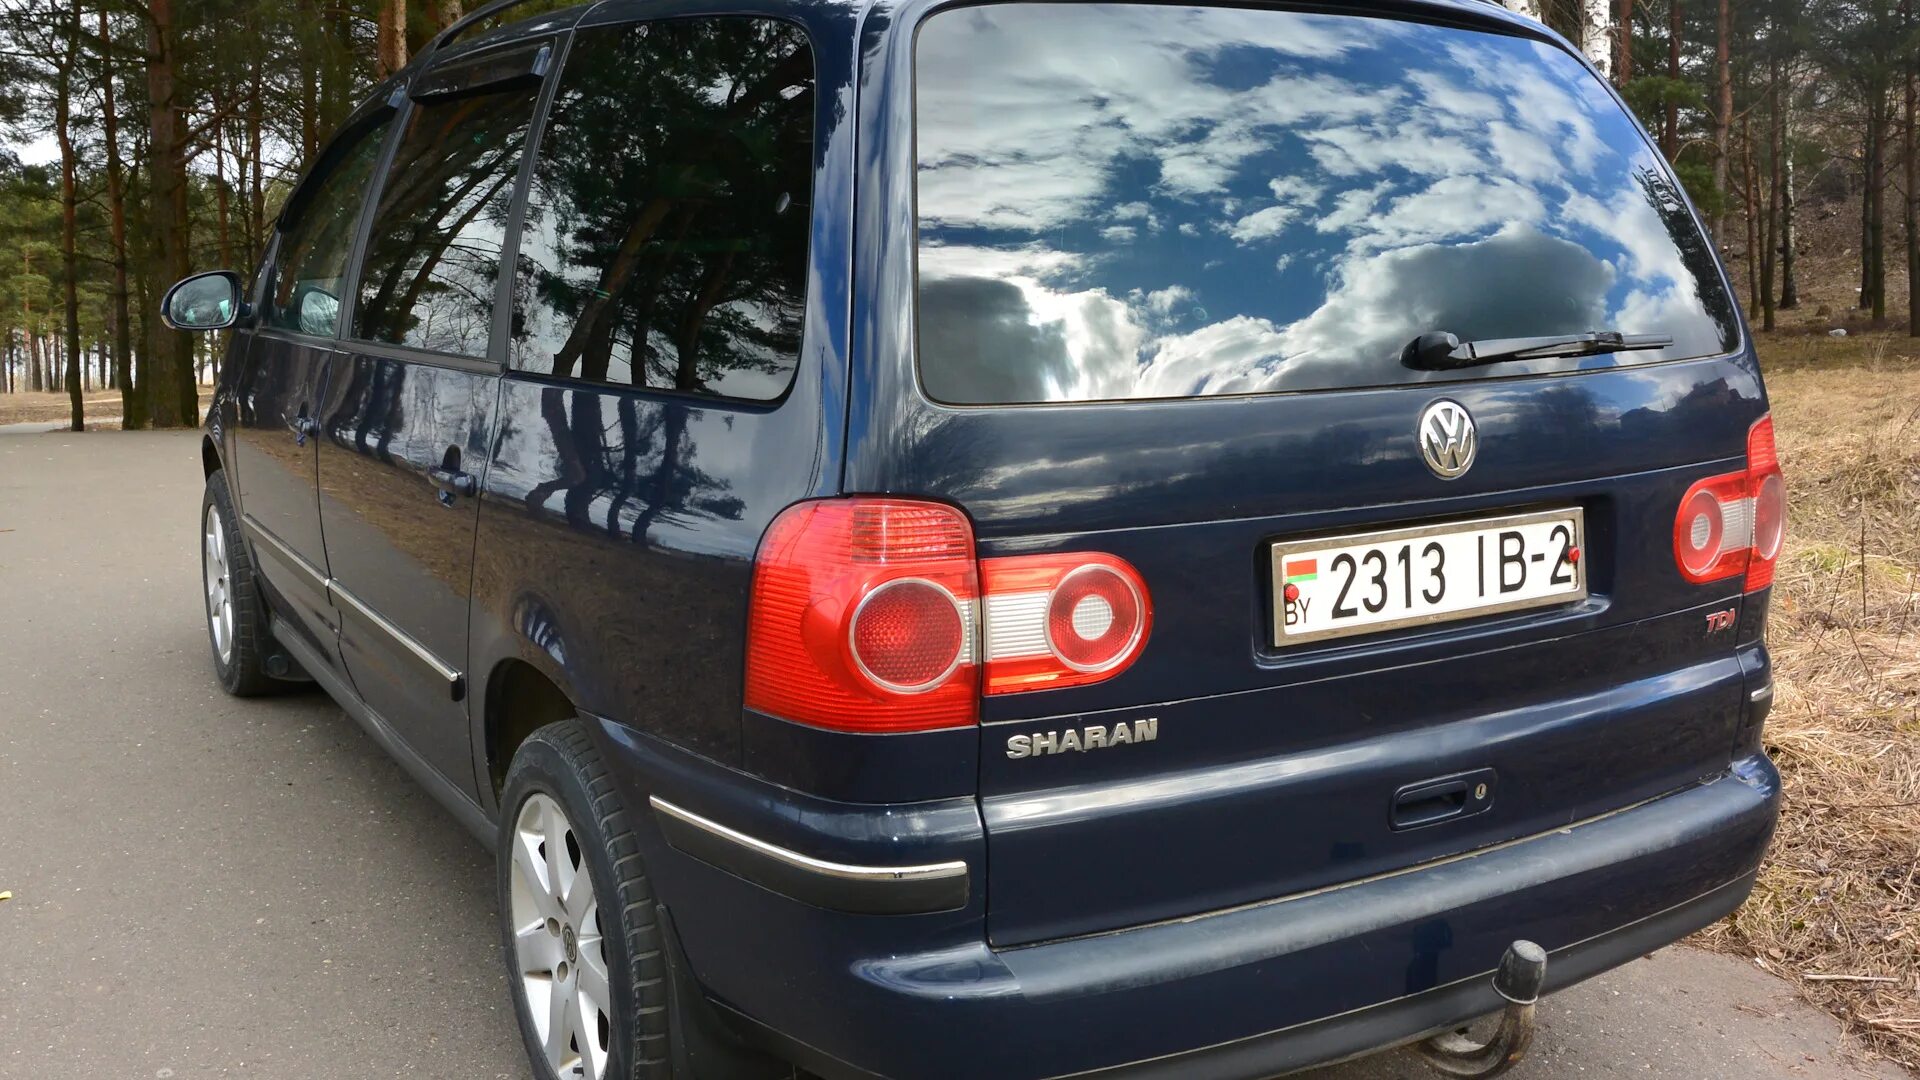 Volkswagen sharan 2001 год. Фольксваген Шаран 2001. Фольксваген Шаран 1.9. Шаран 1.9 TDI. VW Sharan 1.9 TDI 1999.